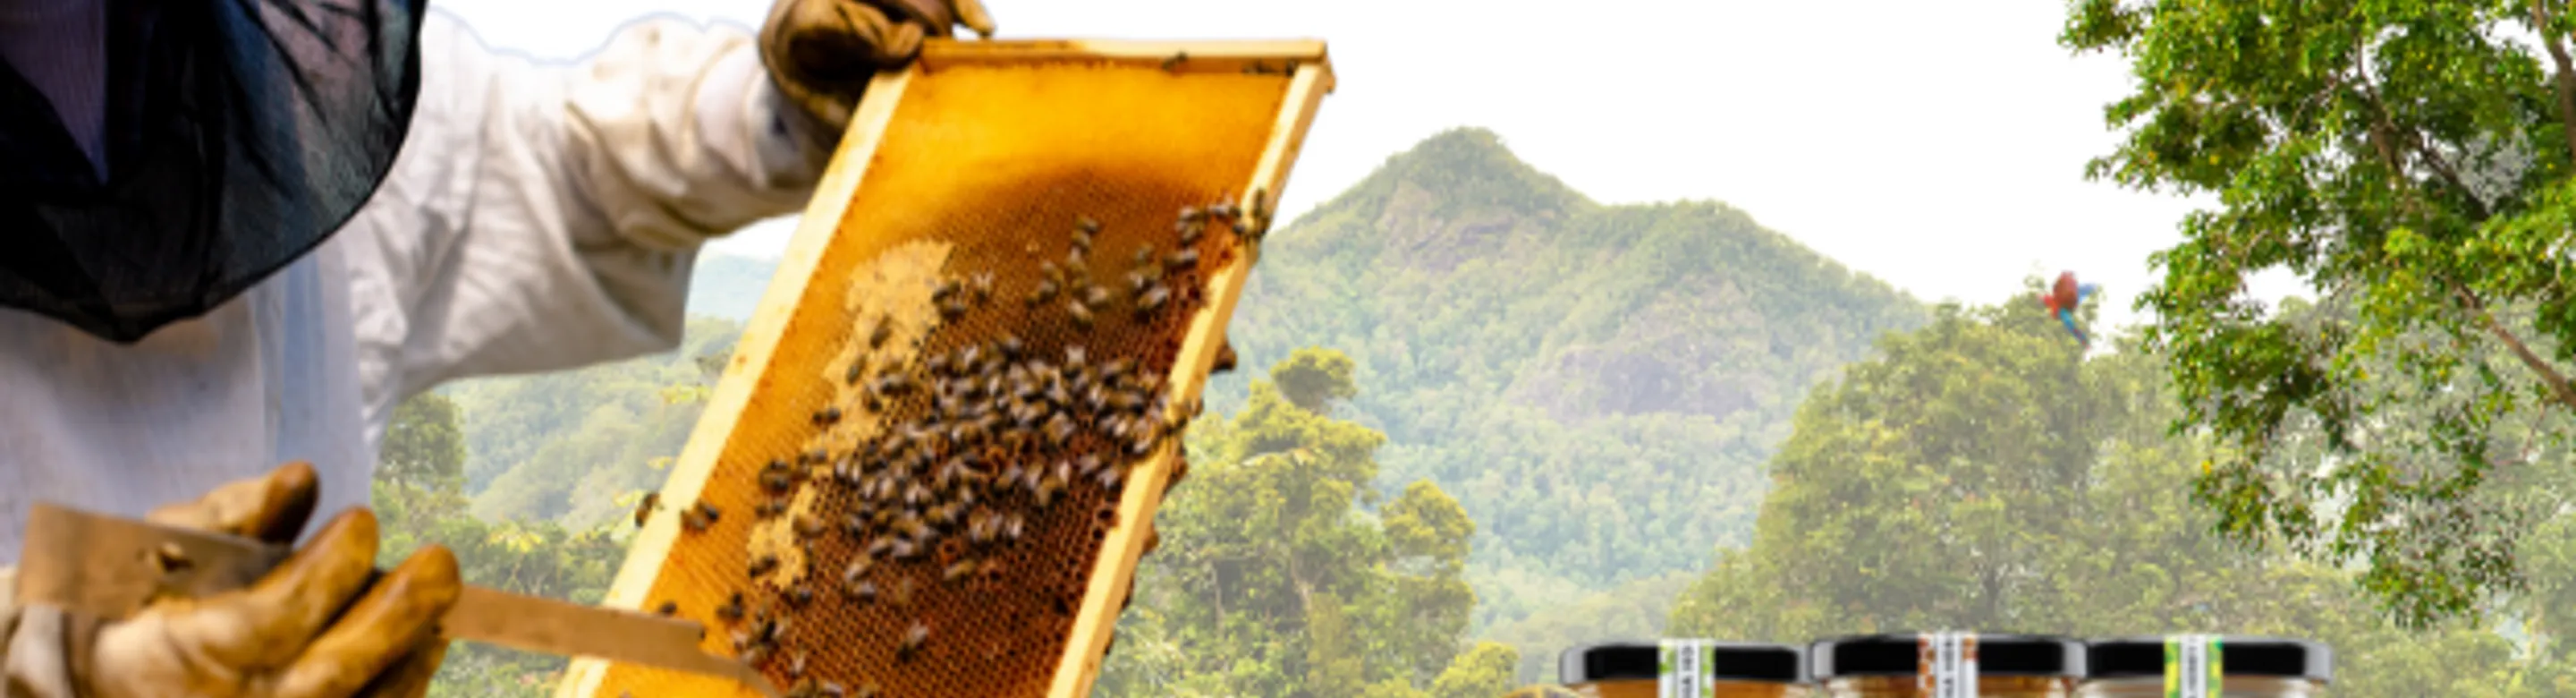 Alpha Honey Health